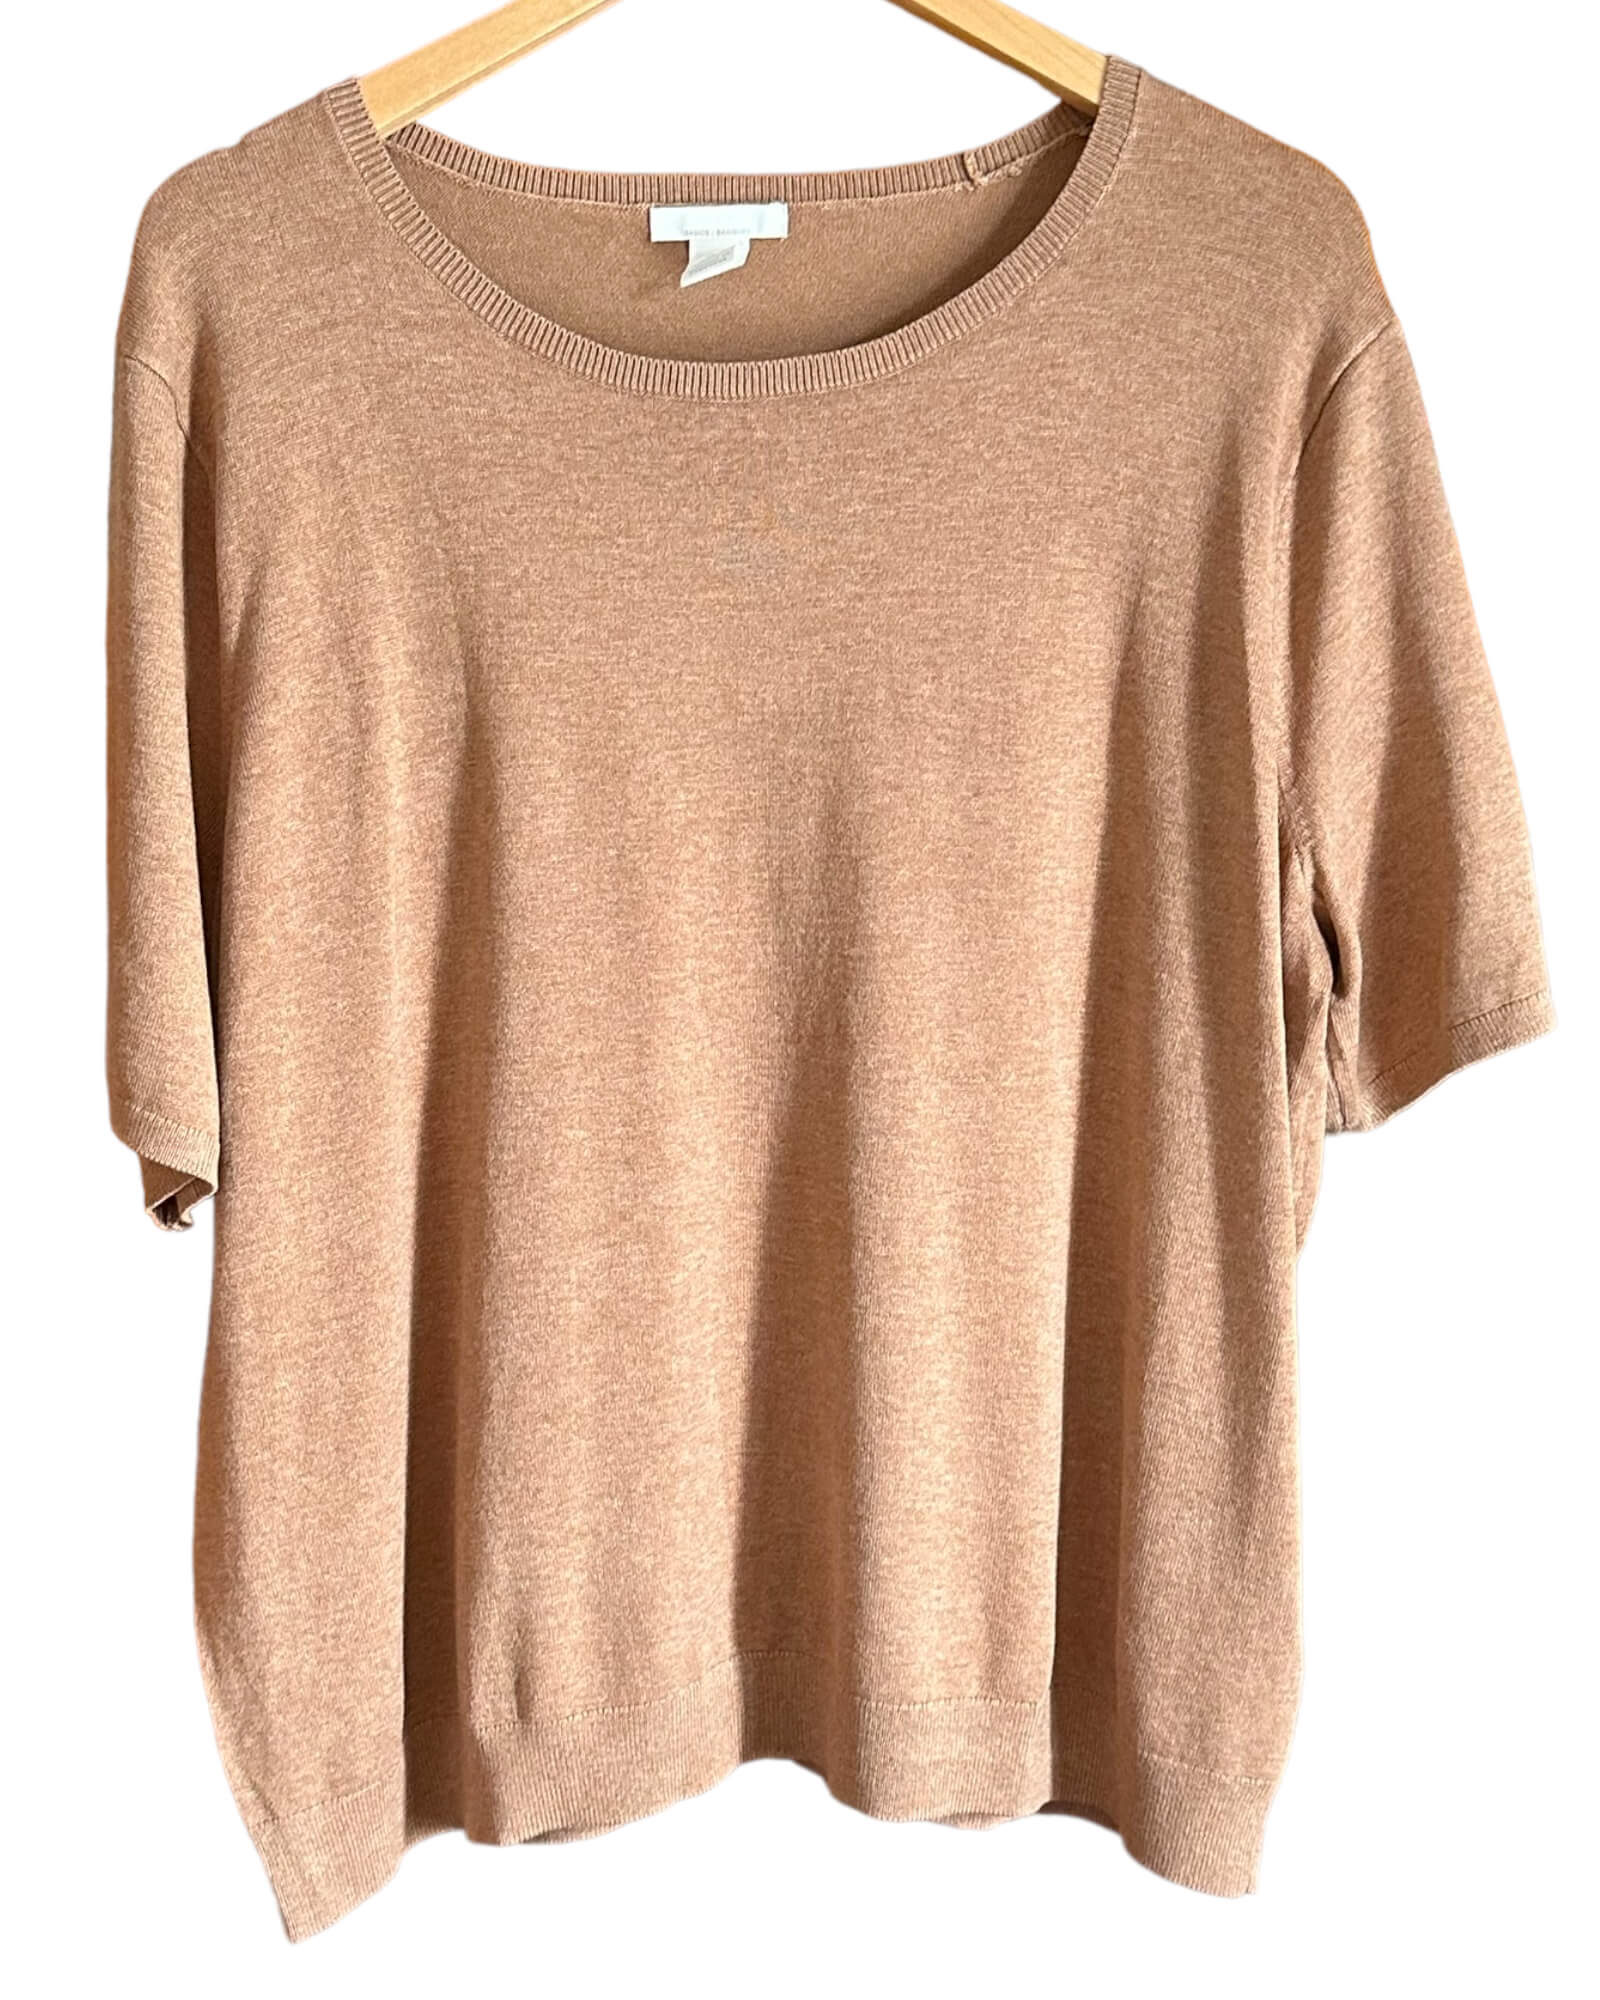 Light Spring H&M beige short sleeve linen sweater